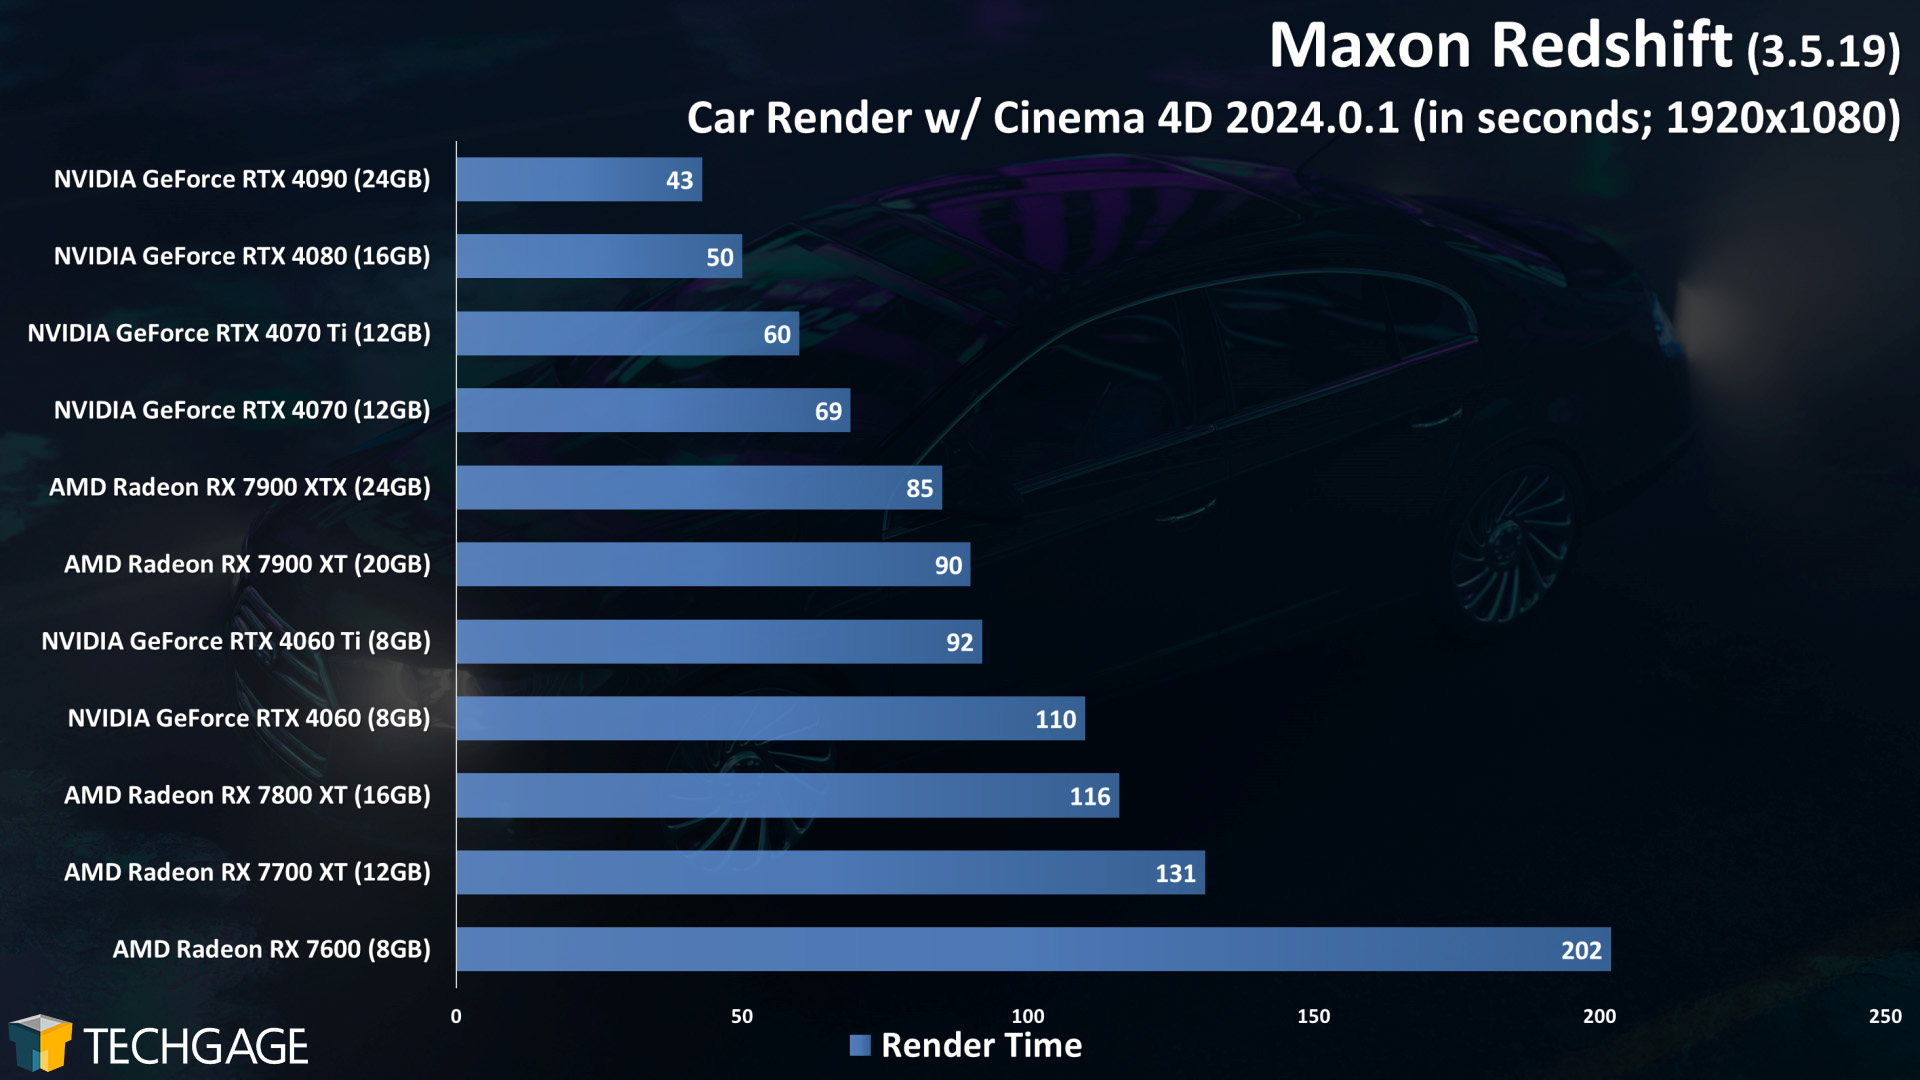 Maxon Redshift (Cinema 4D) Car GPU Render